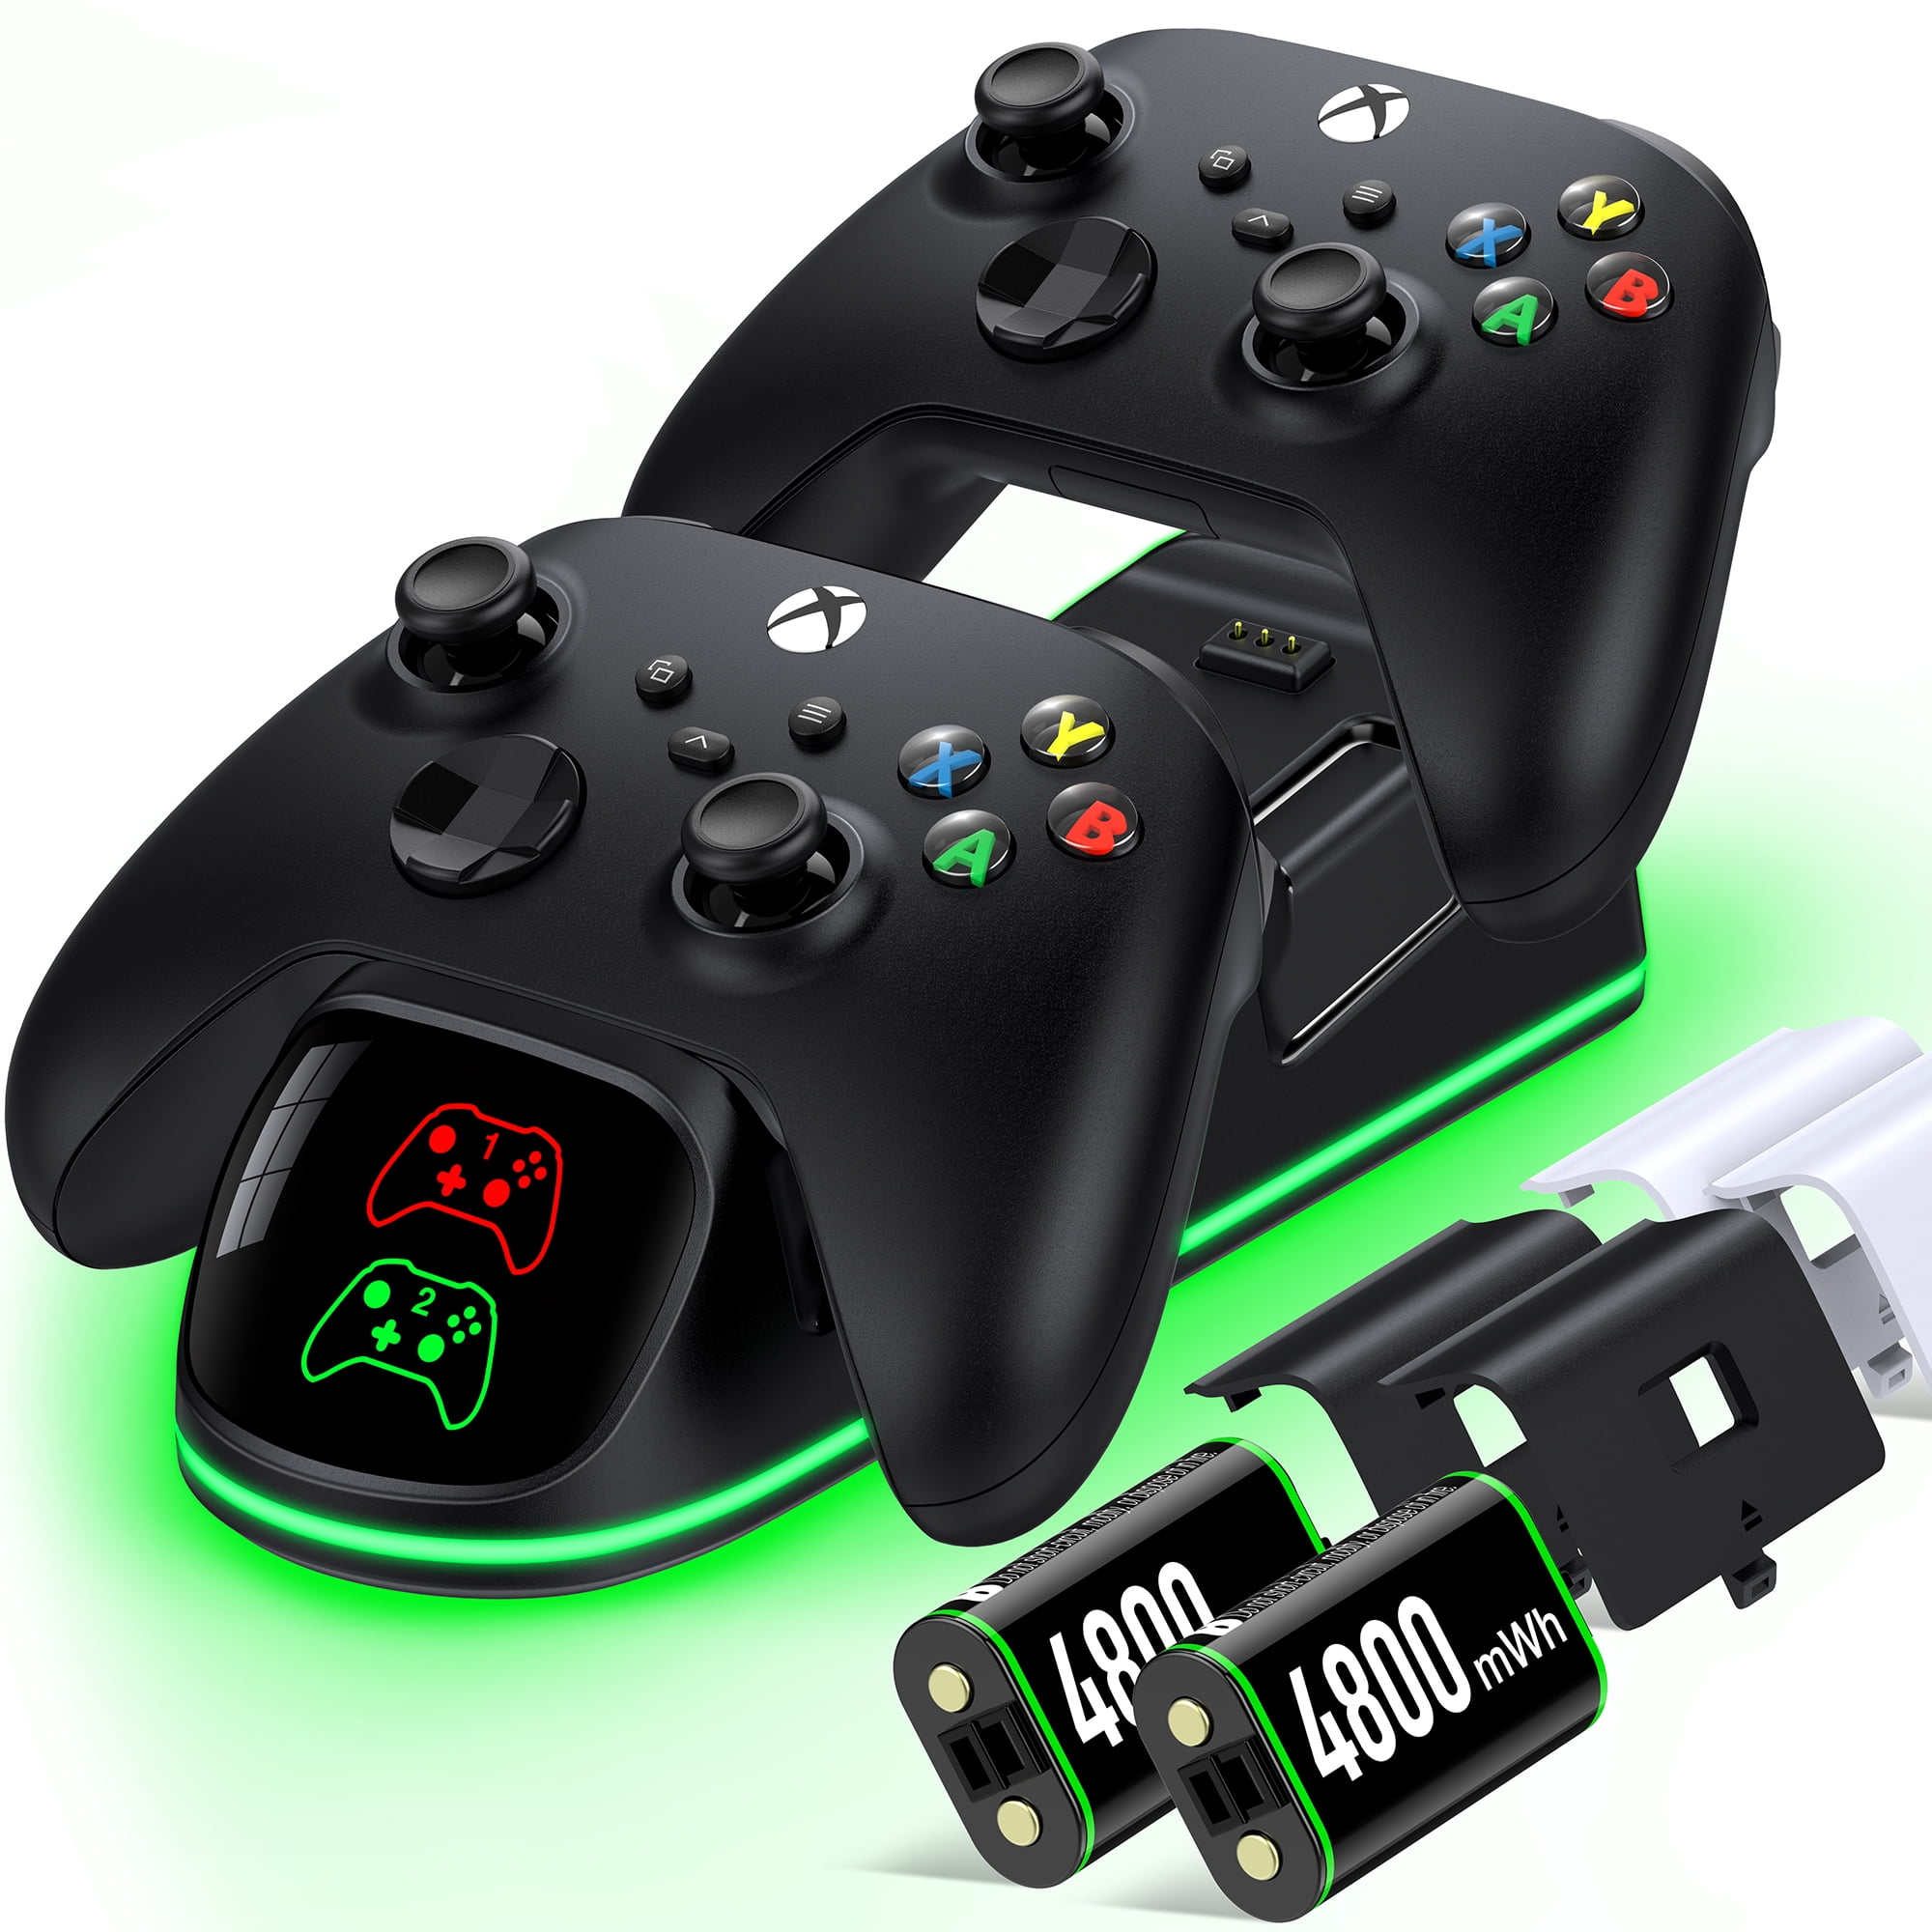 Power A Play and Charge Kit de Carga para Mandos Xbox One y Xbox X